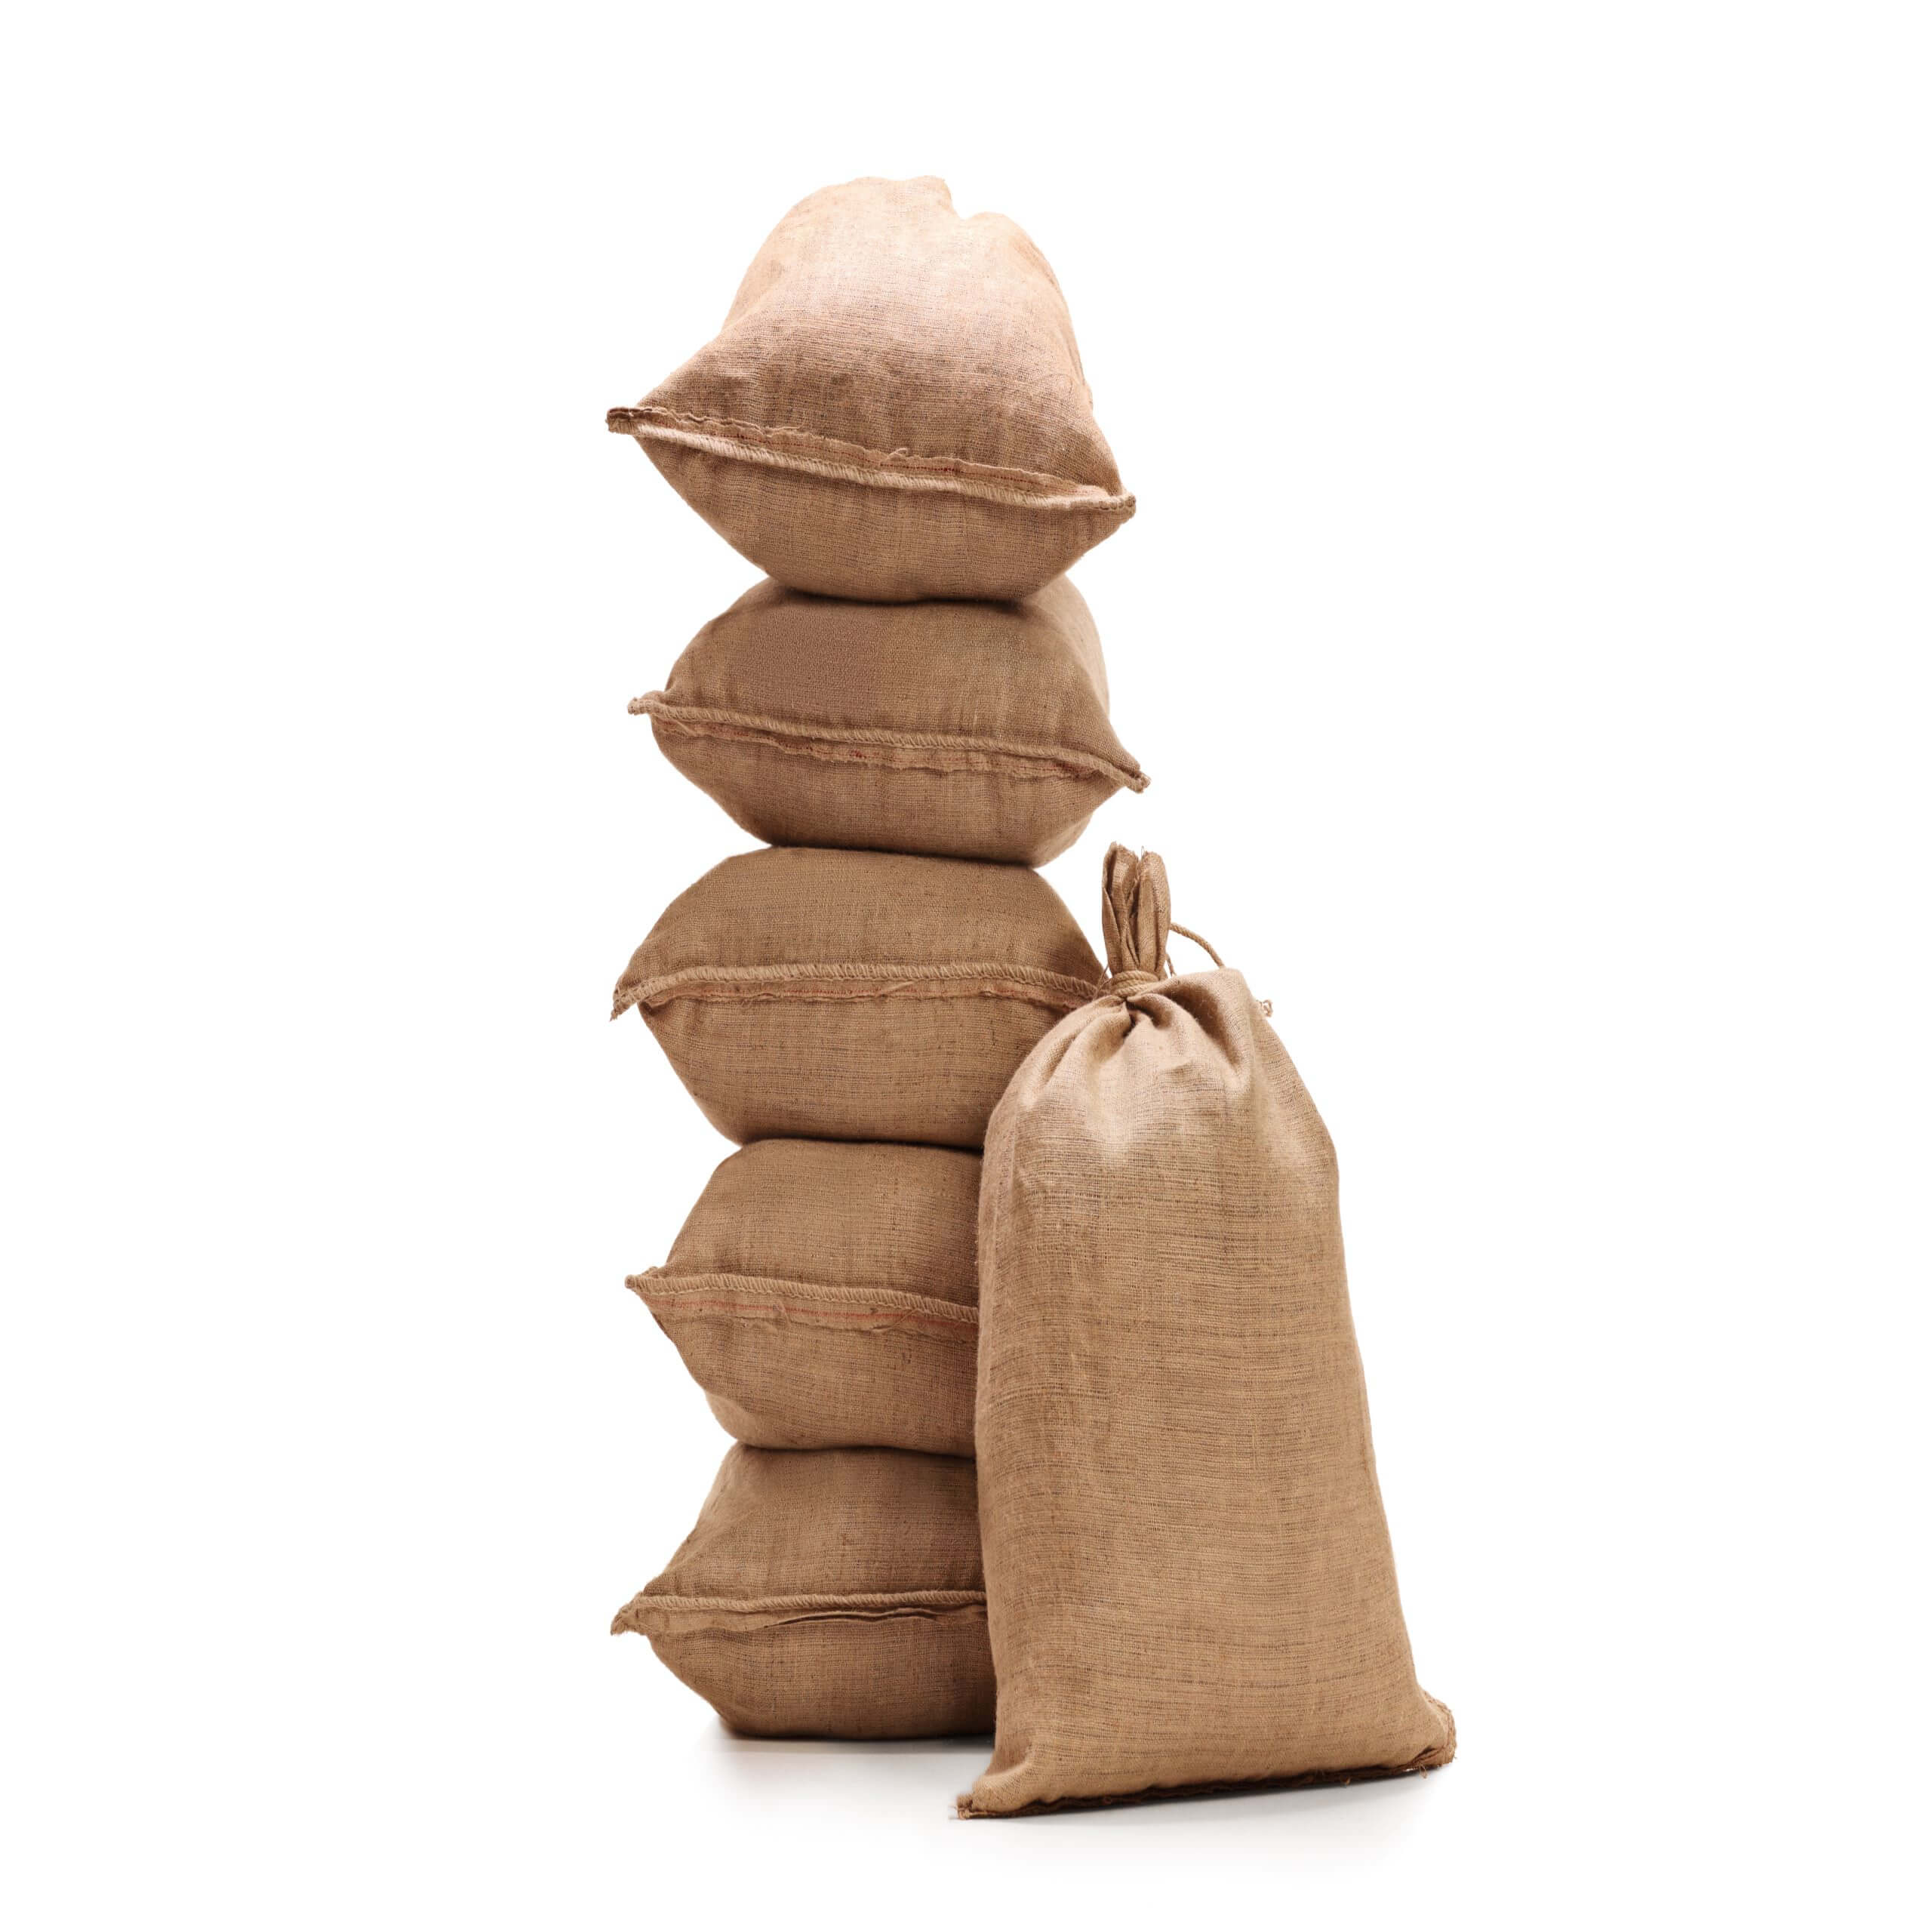 An Image of Hessian Sandbags.